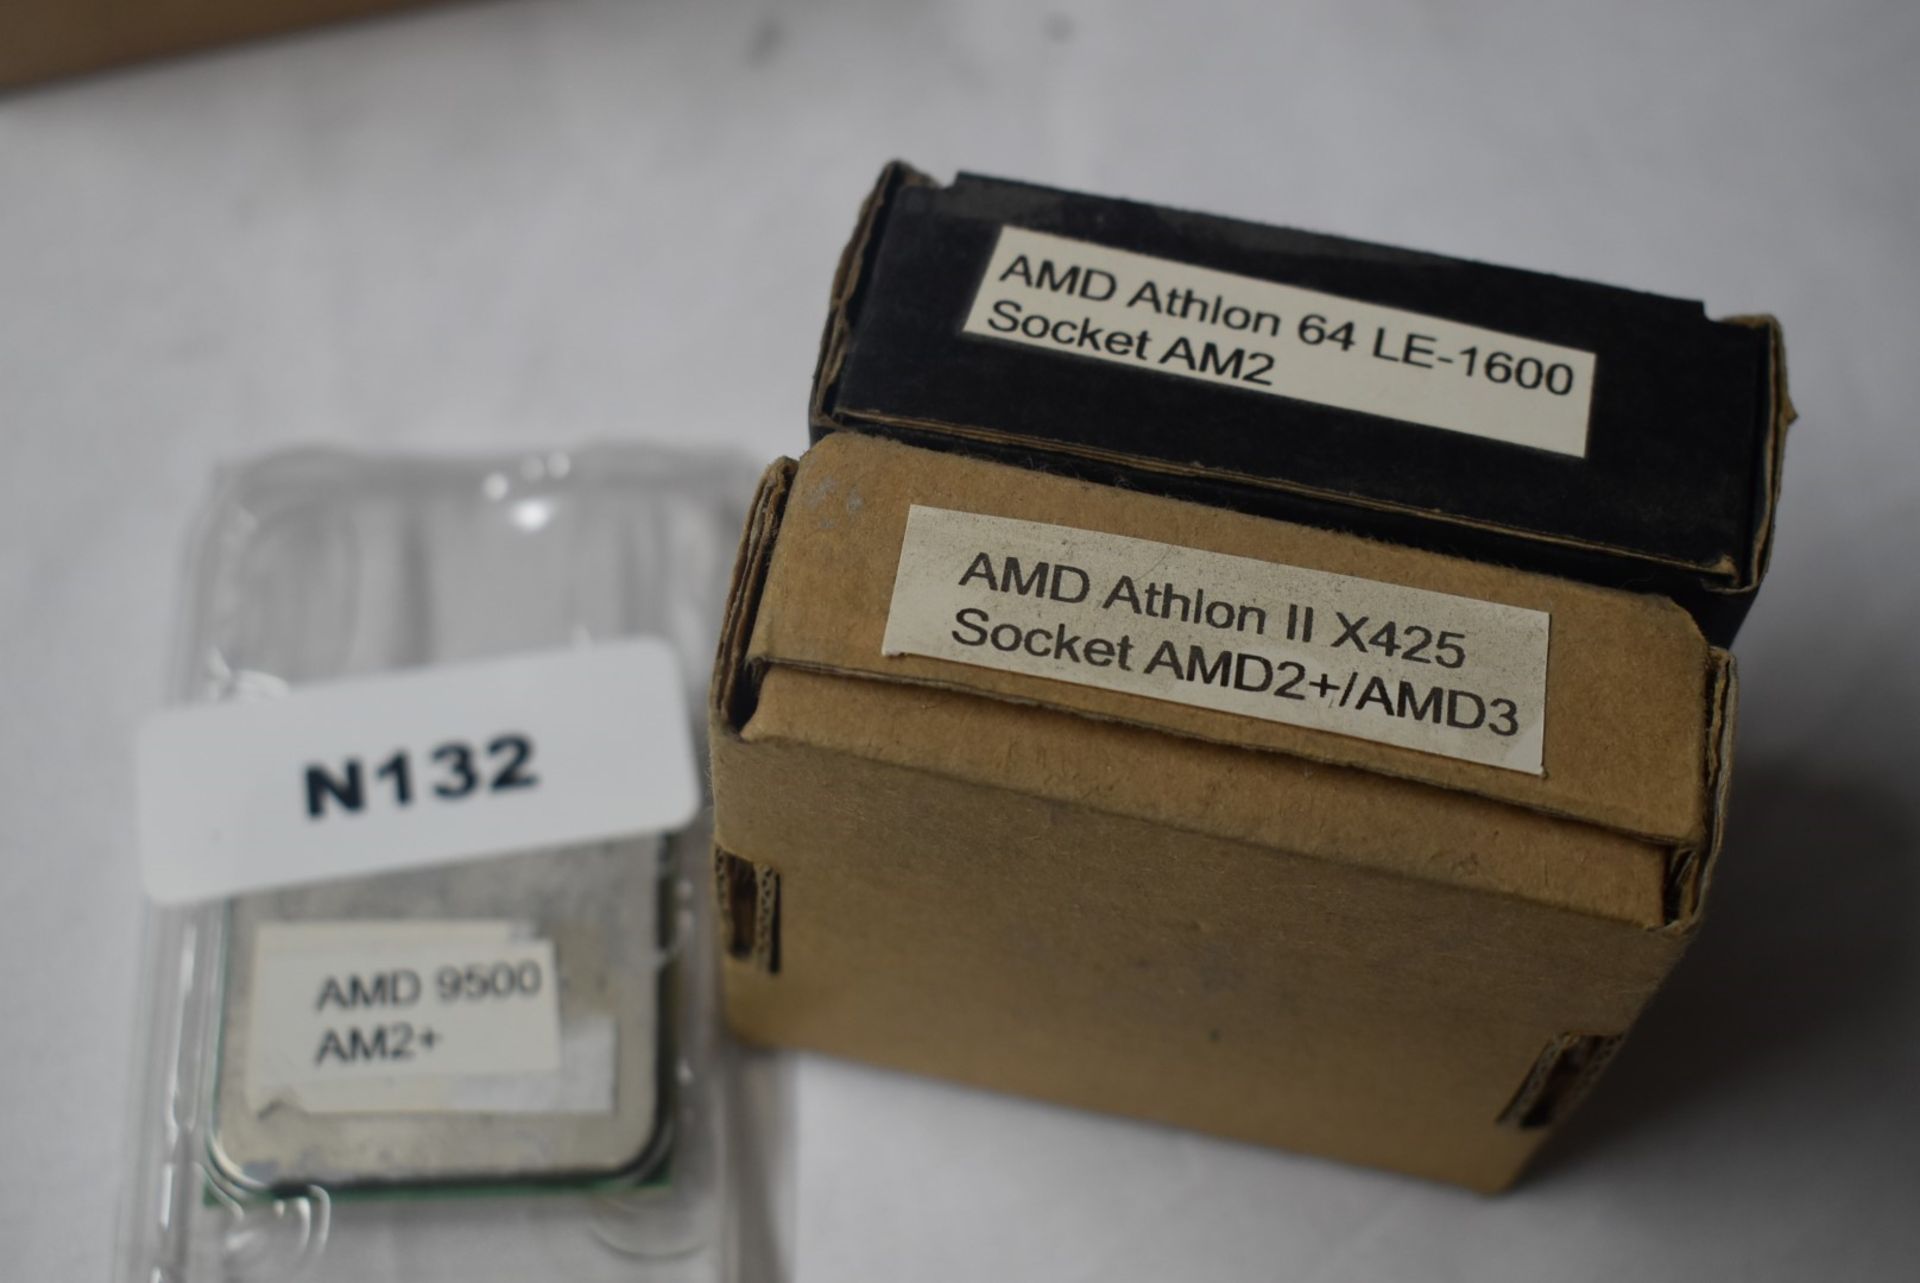 3 x AMD Socket AM2 Desktop PC Processors - Includes 1 x Phenom X4 9500, 1 x Athlon LE1600 and 1 x - Image 2 of 2